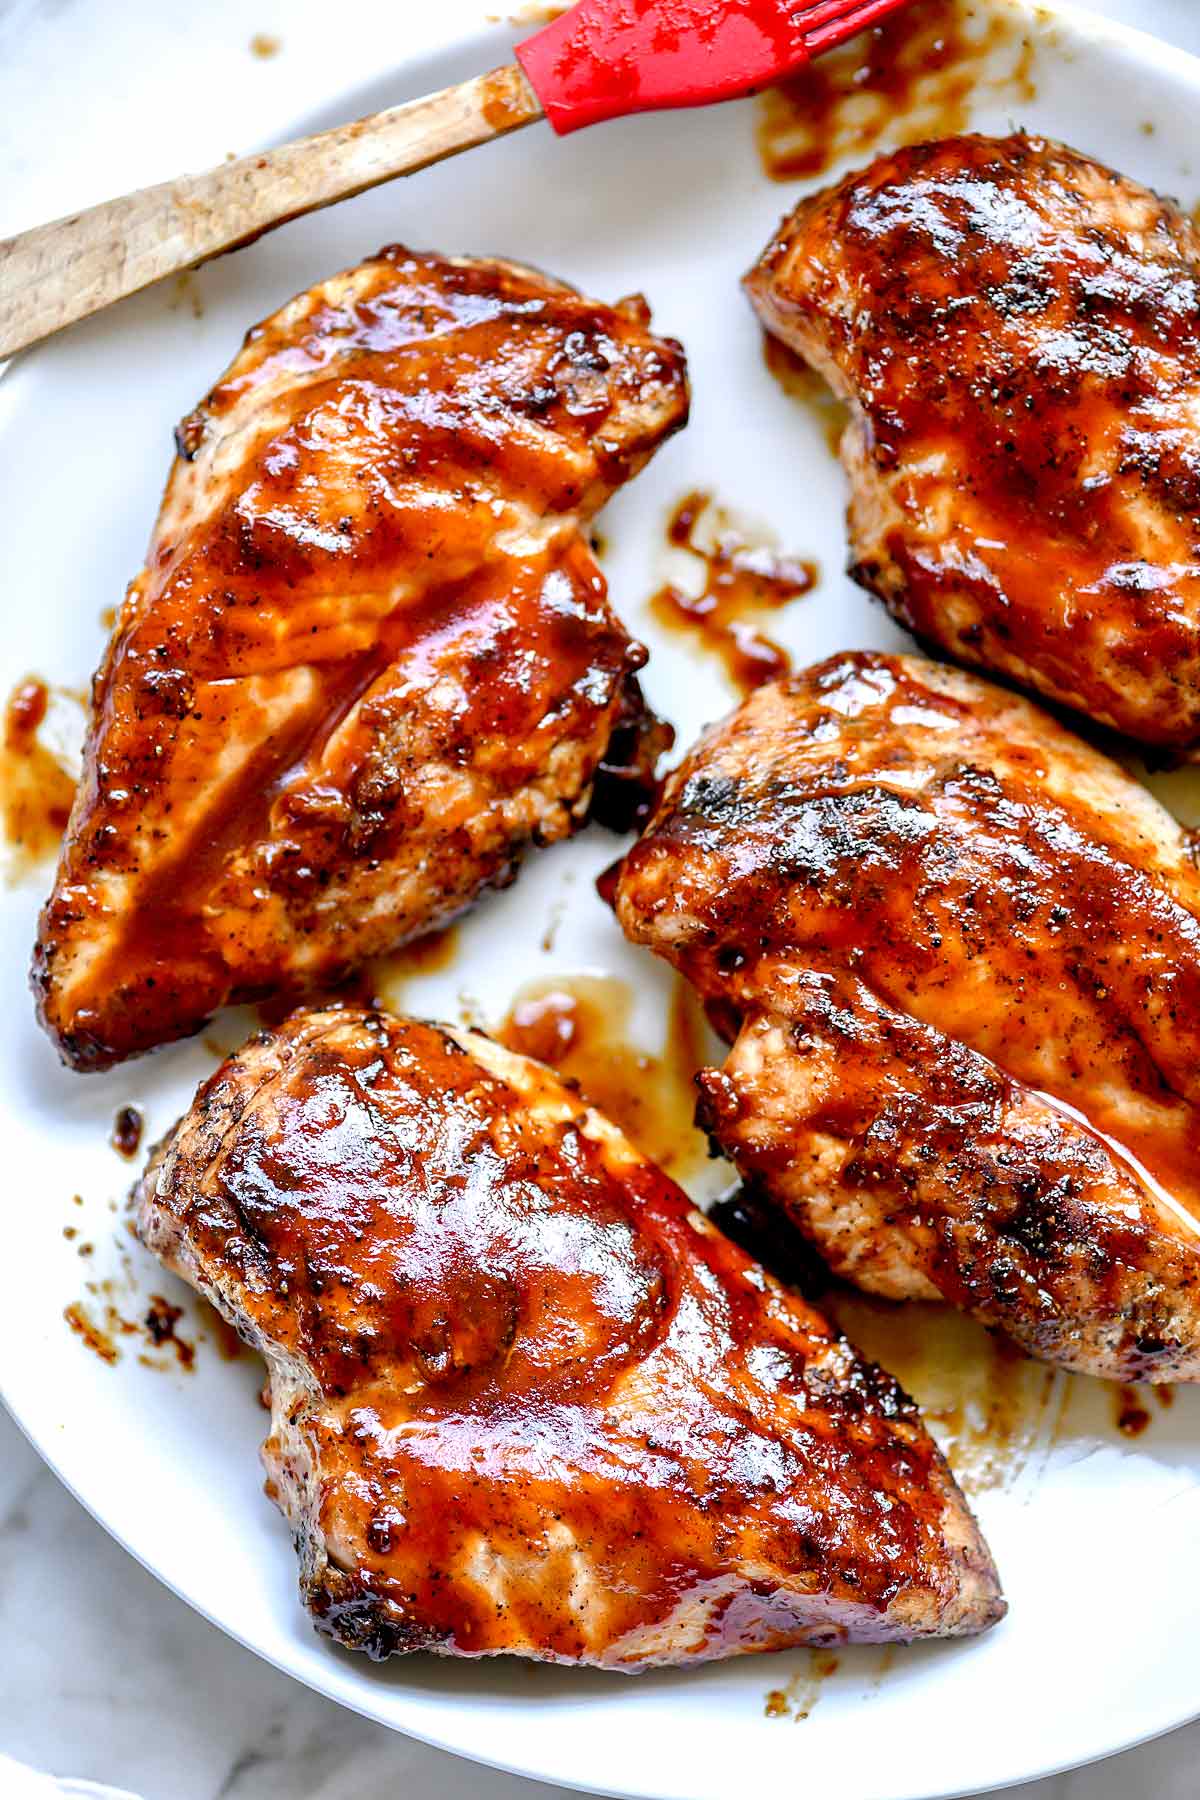 https://www.foodiecrush.com/wp-content/uploads/2019/07/BBQ-Chicken-Breasts-foodiecrush.com-007.jpg